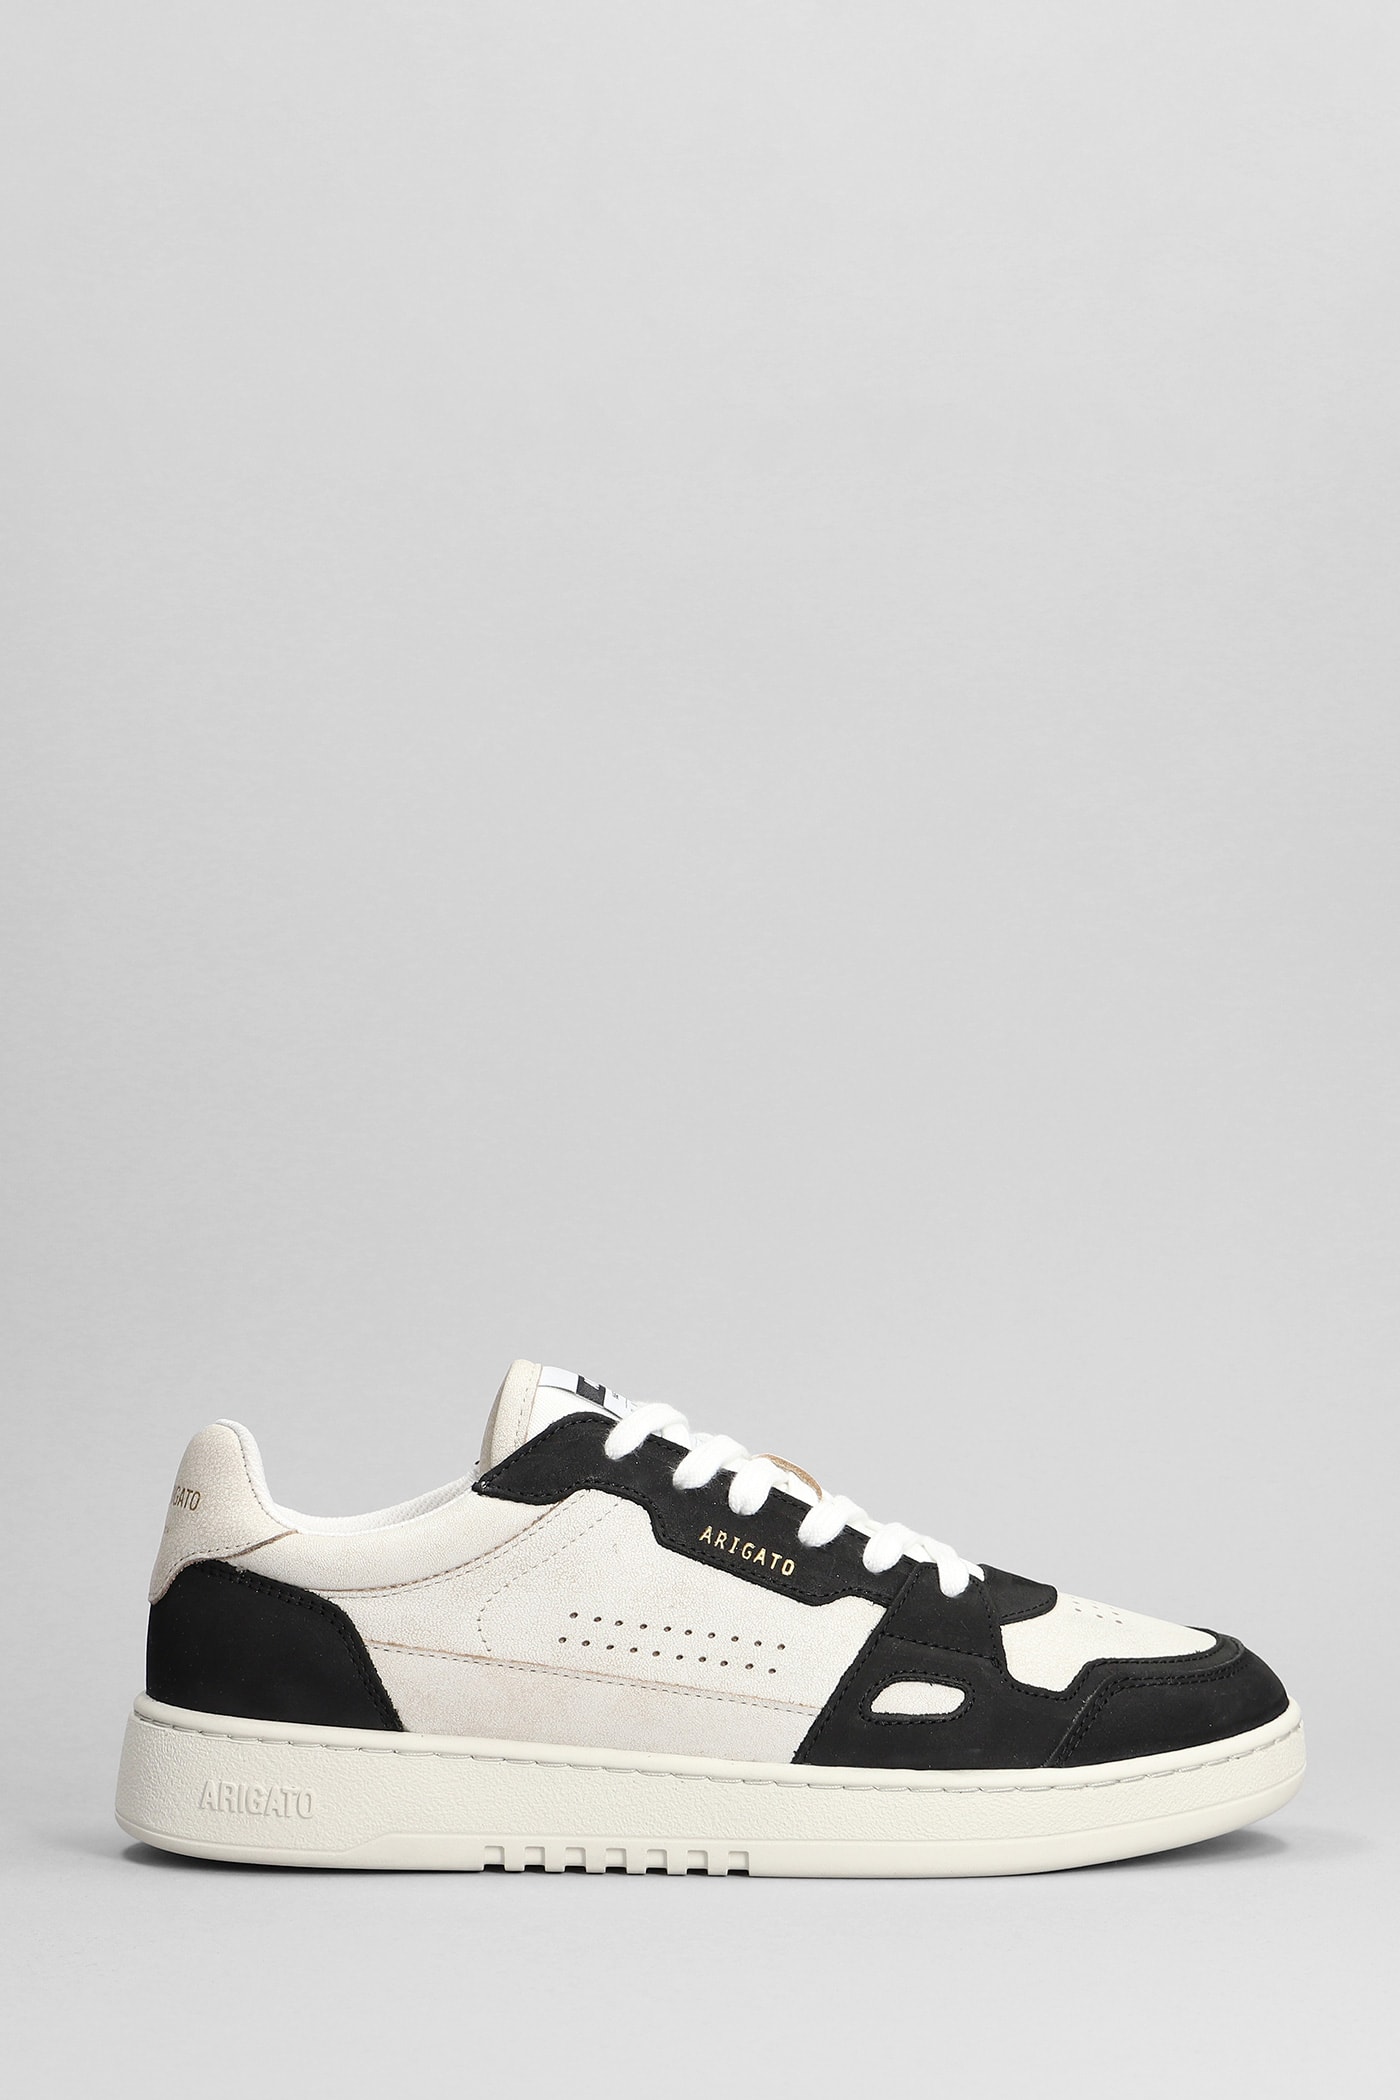 Axel Arigato Dice Lo Sneaker Sneakers In Beige Leather